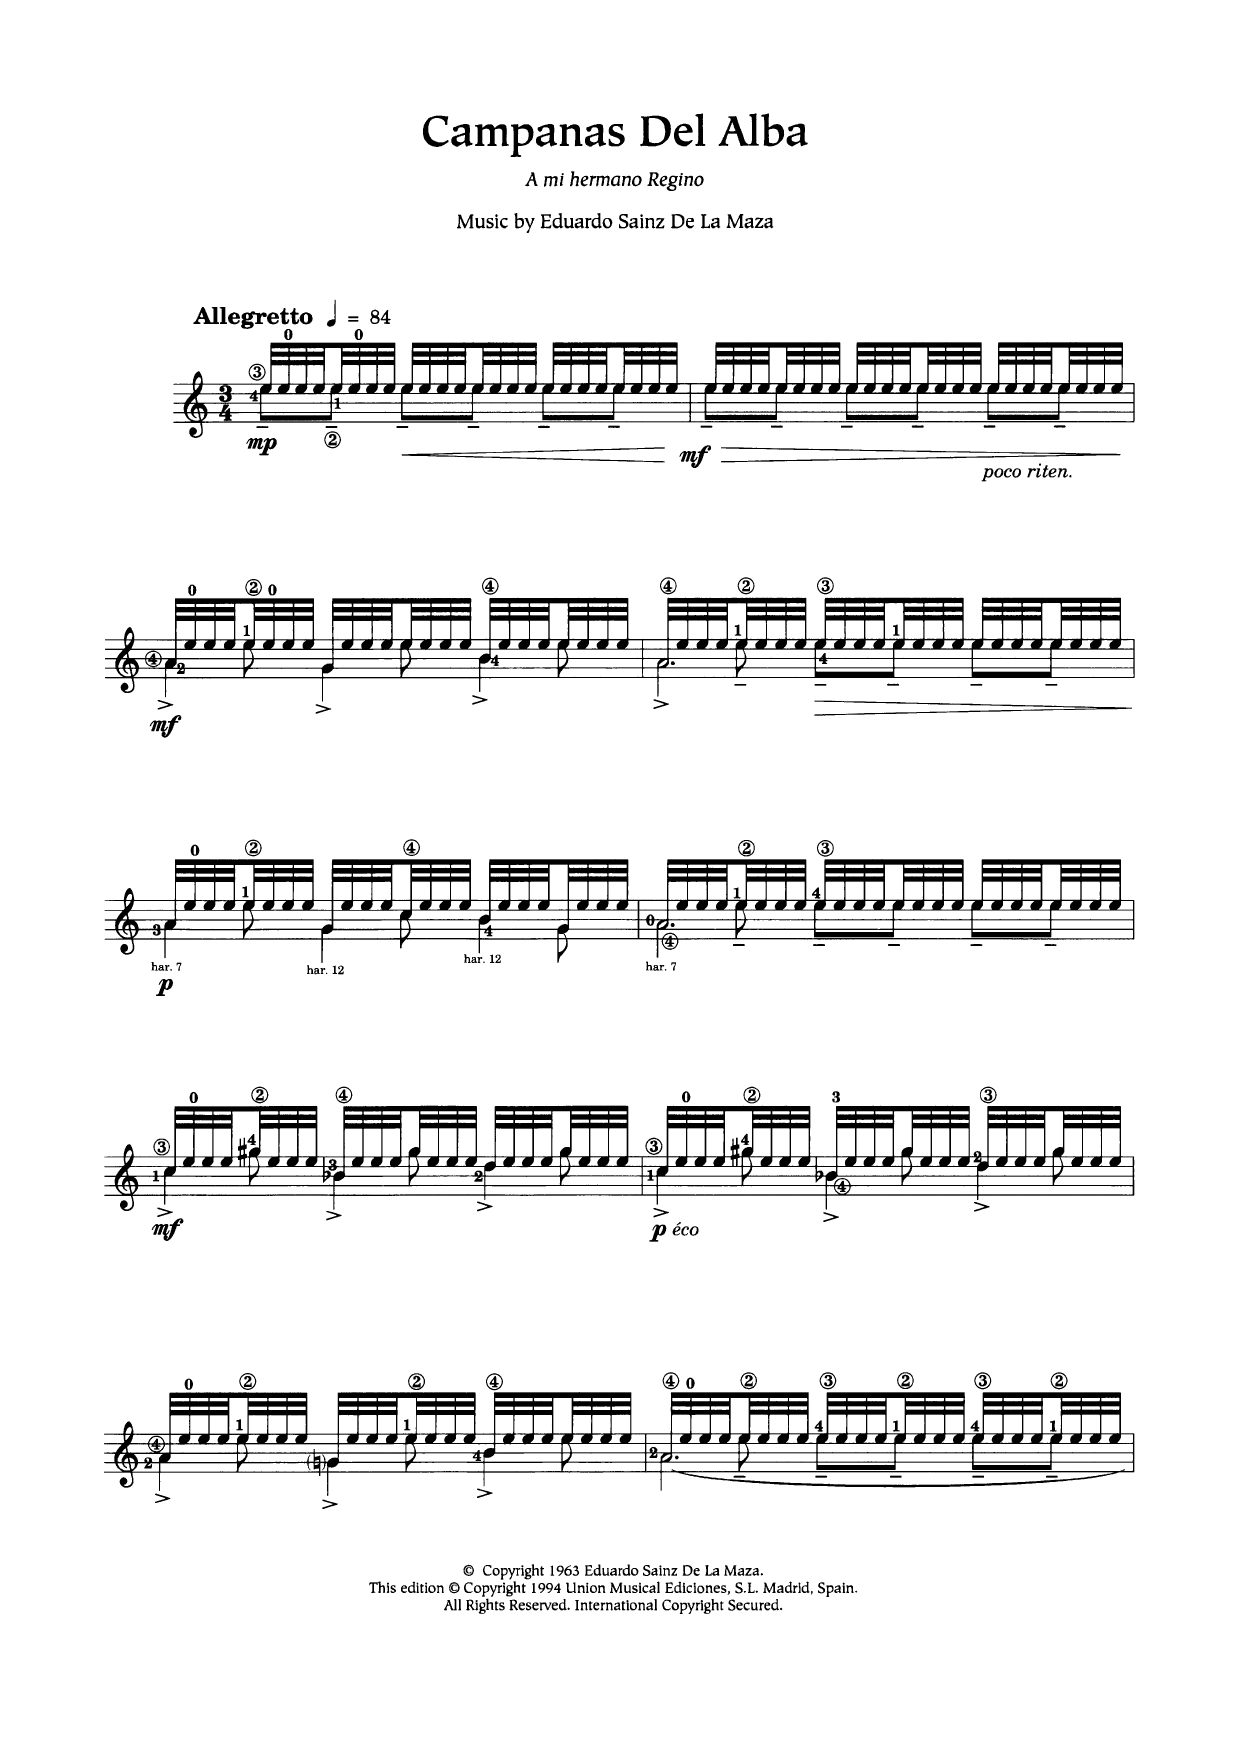 Eduardo Sainz de la Maza Campanas Del Alba Sheet Music Notes & Chords for Guitar - Download or Print PDF